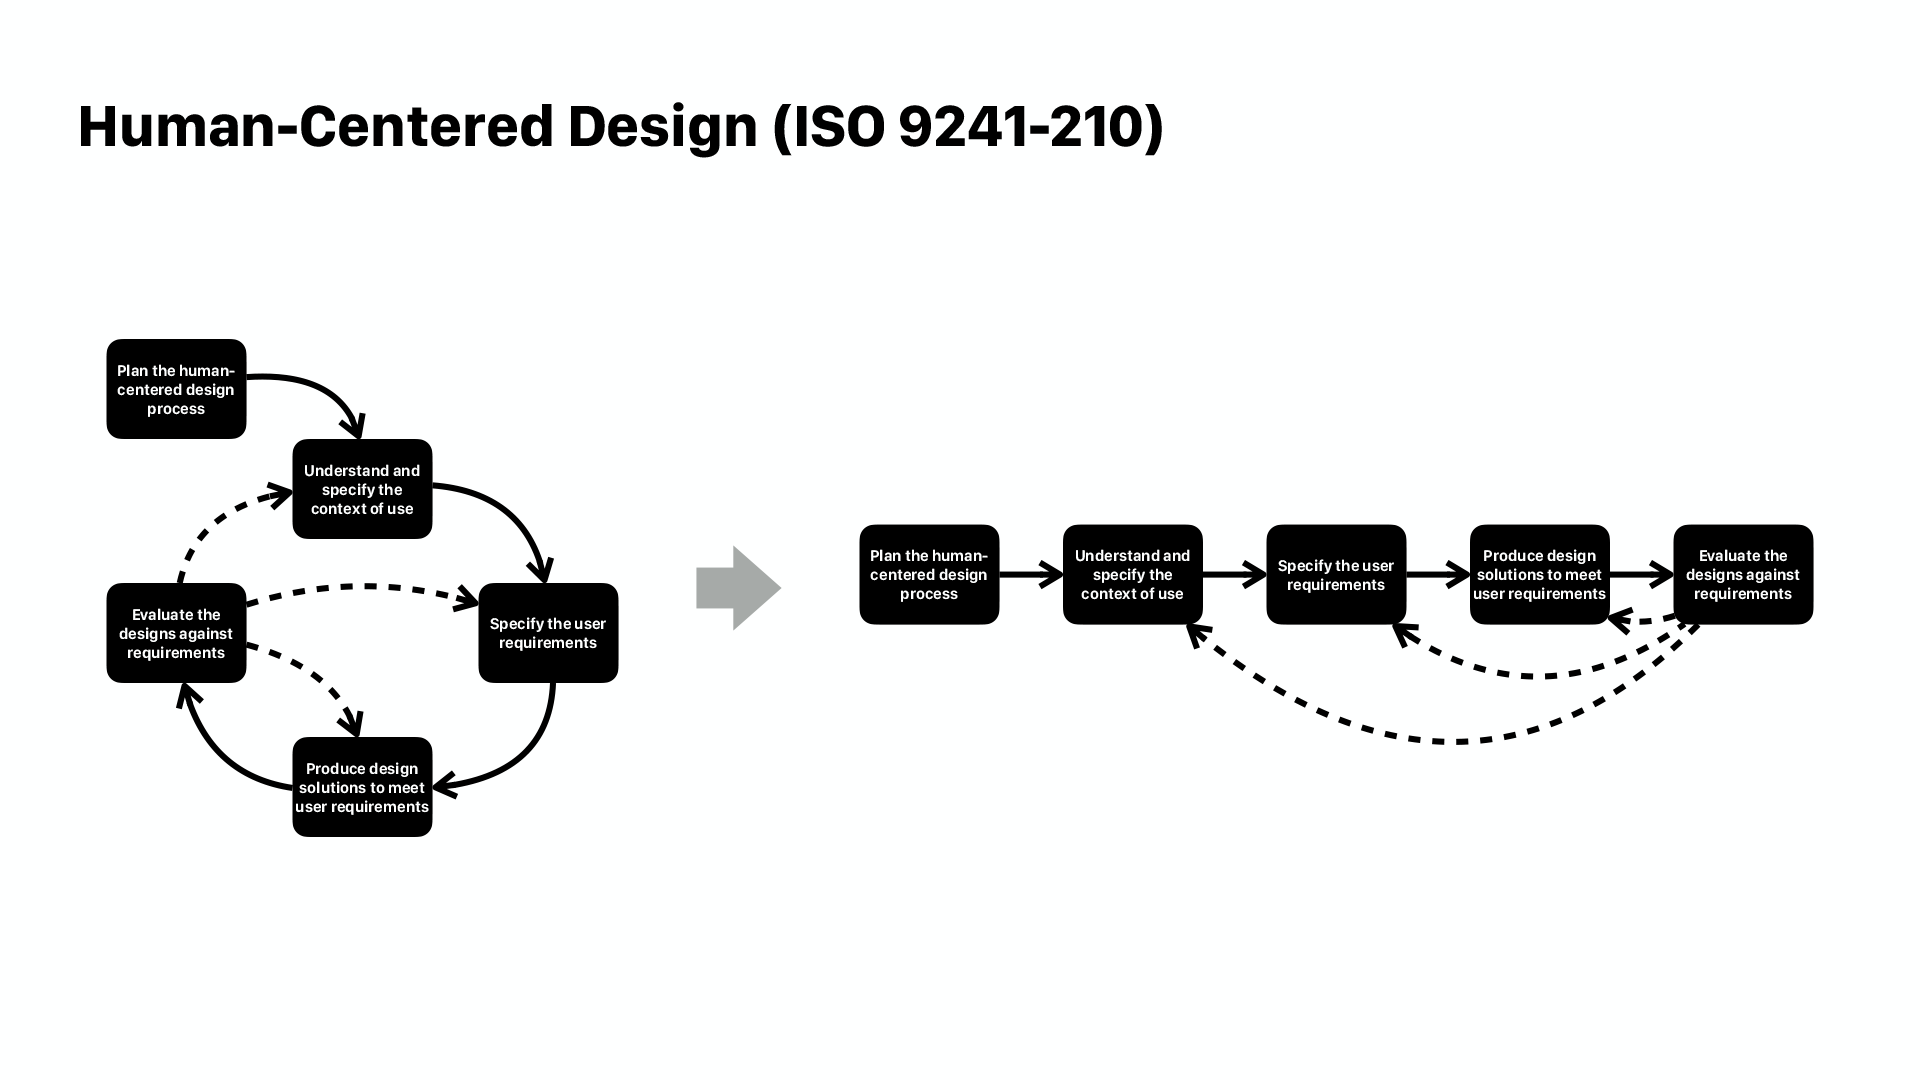 Human-Centered Design (ISO 9241-210)